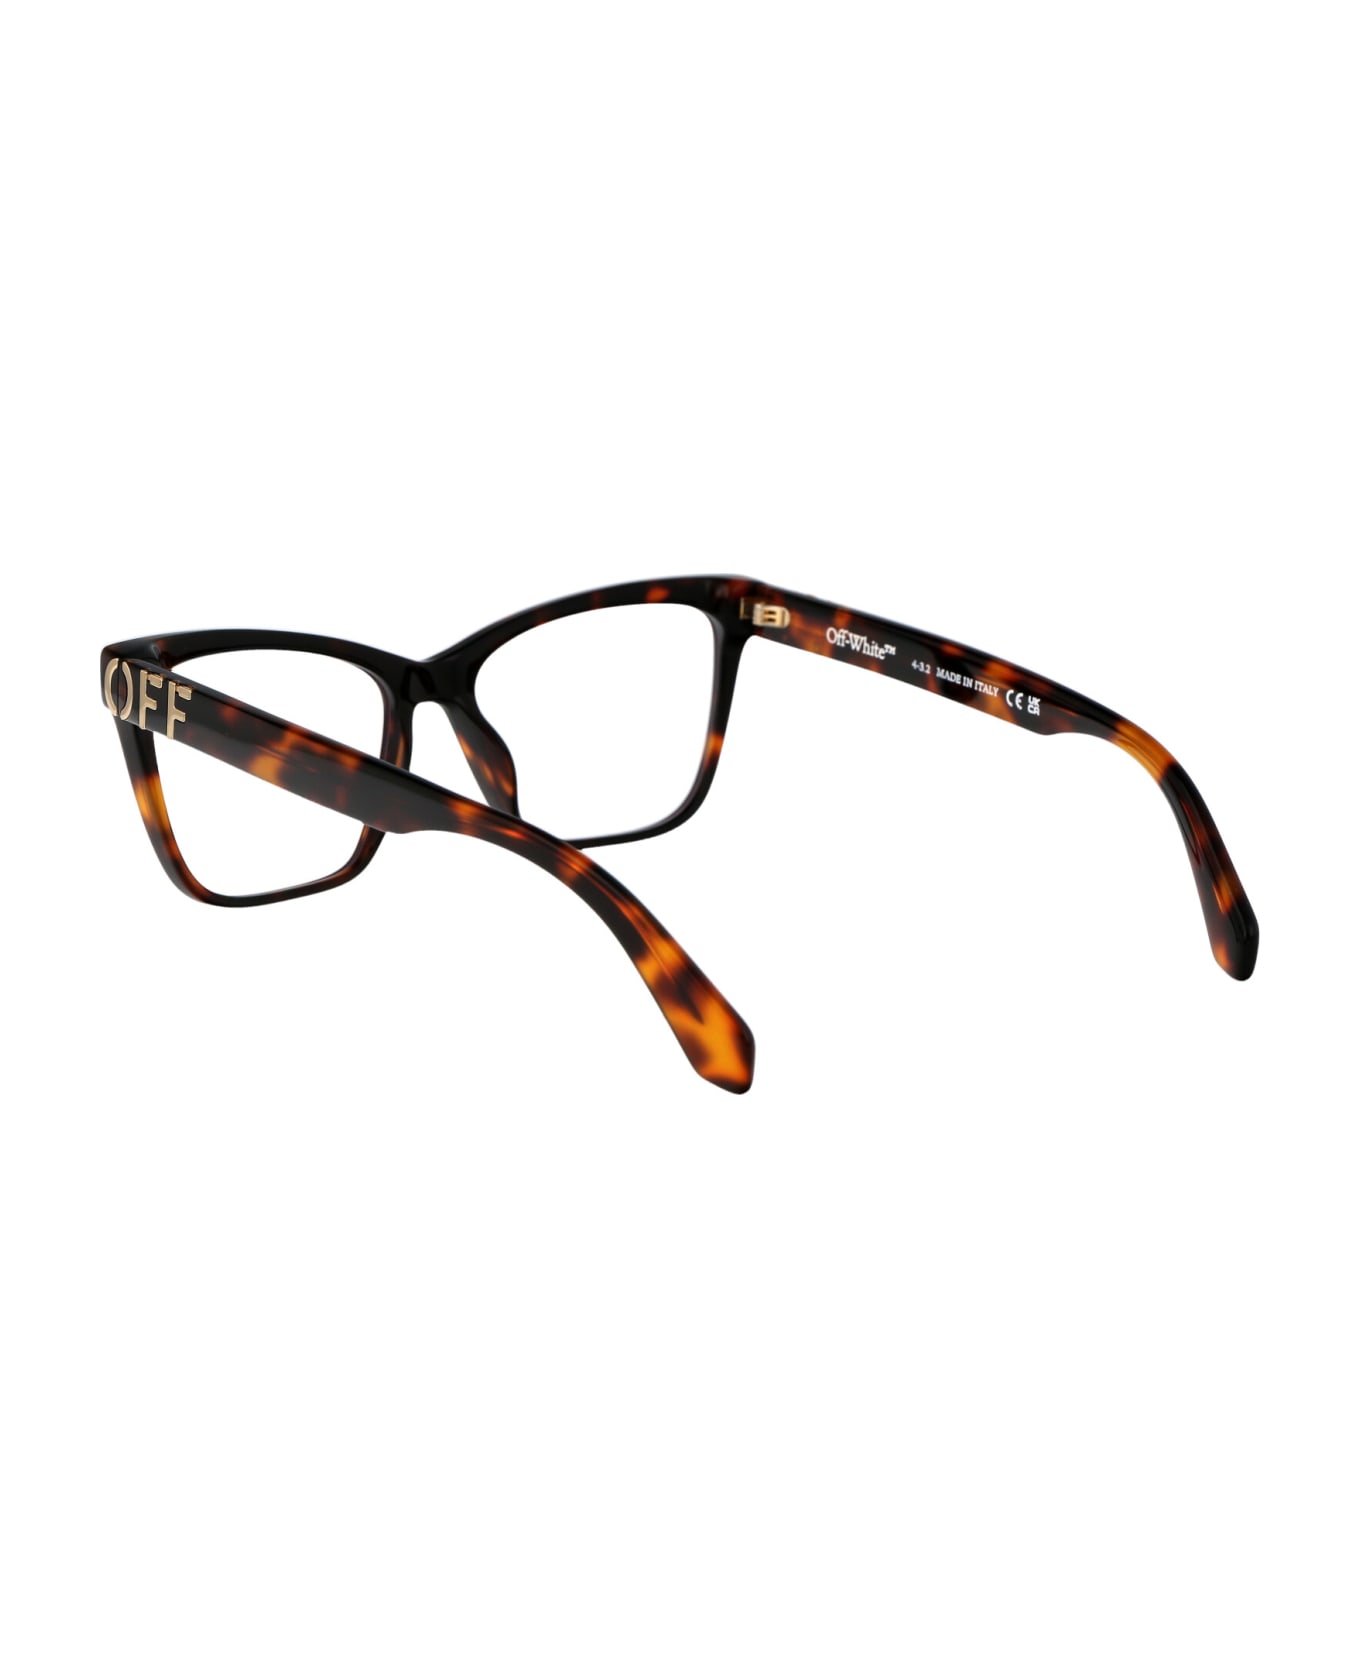 Off-White Optical Style 67 Glasses - 6000 HAVANA